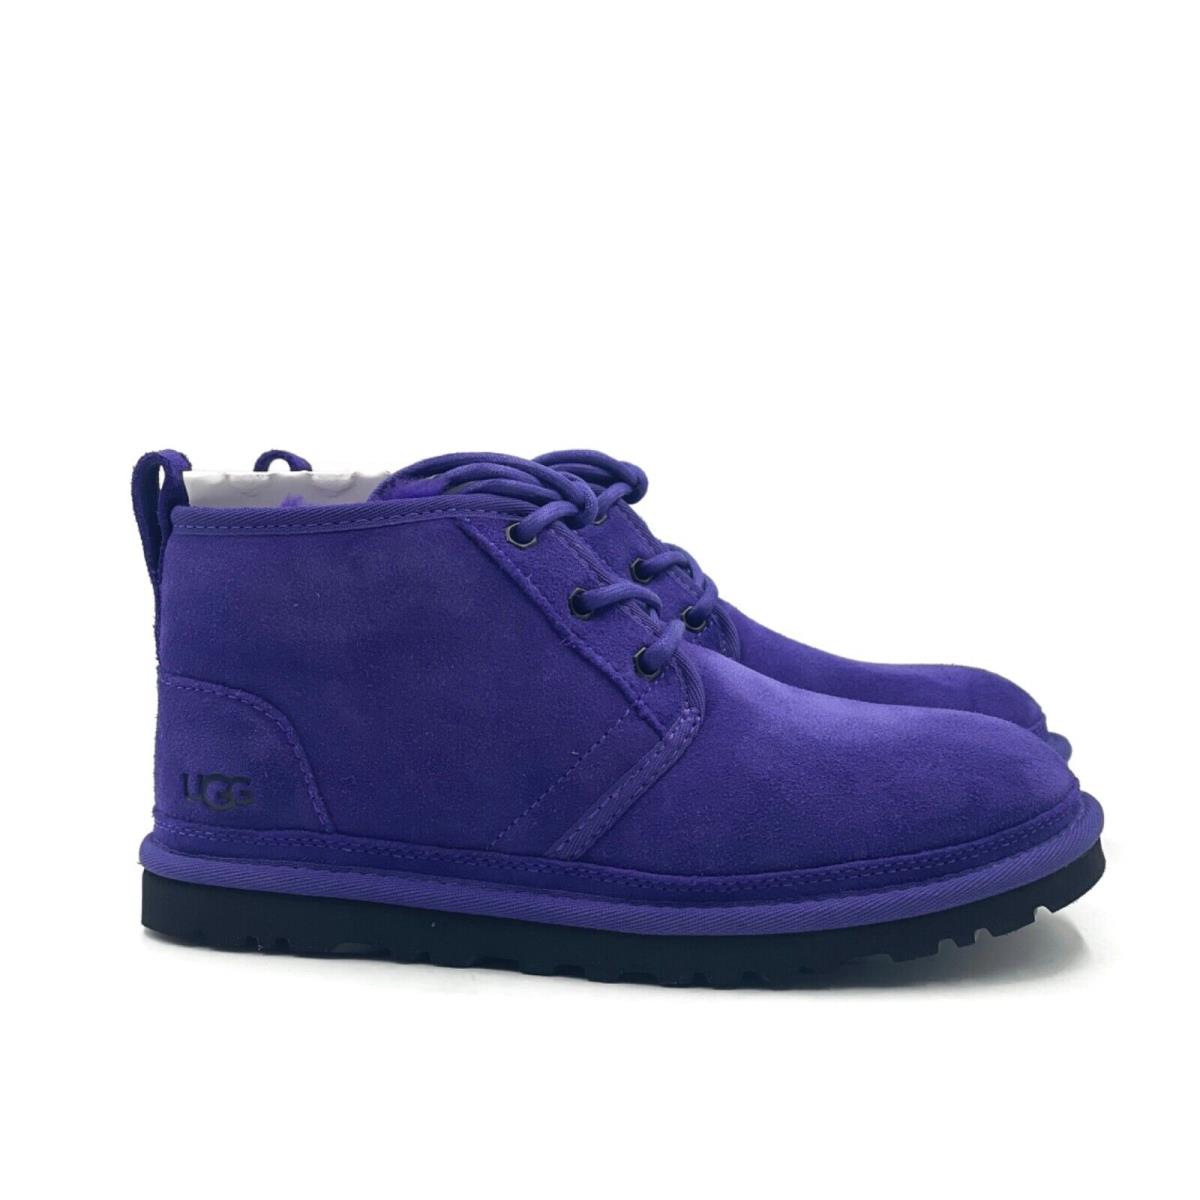 Ugg Neumel Women Size 6-7 Insulated Chukka Boot Purple Casual Fashion Shoe